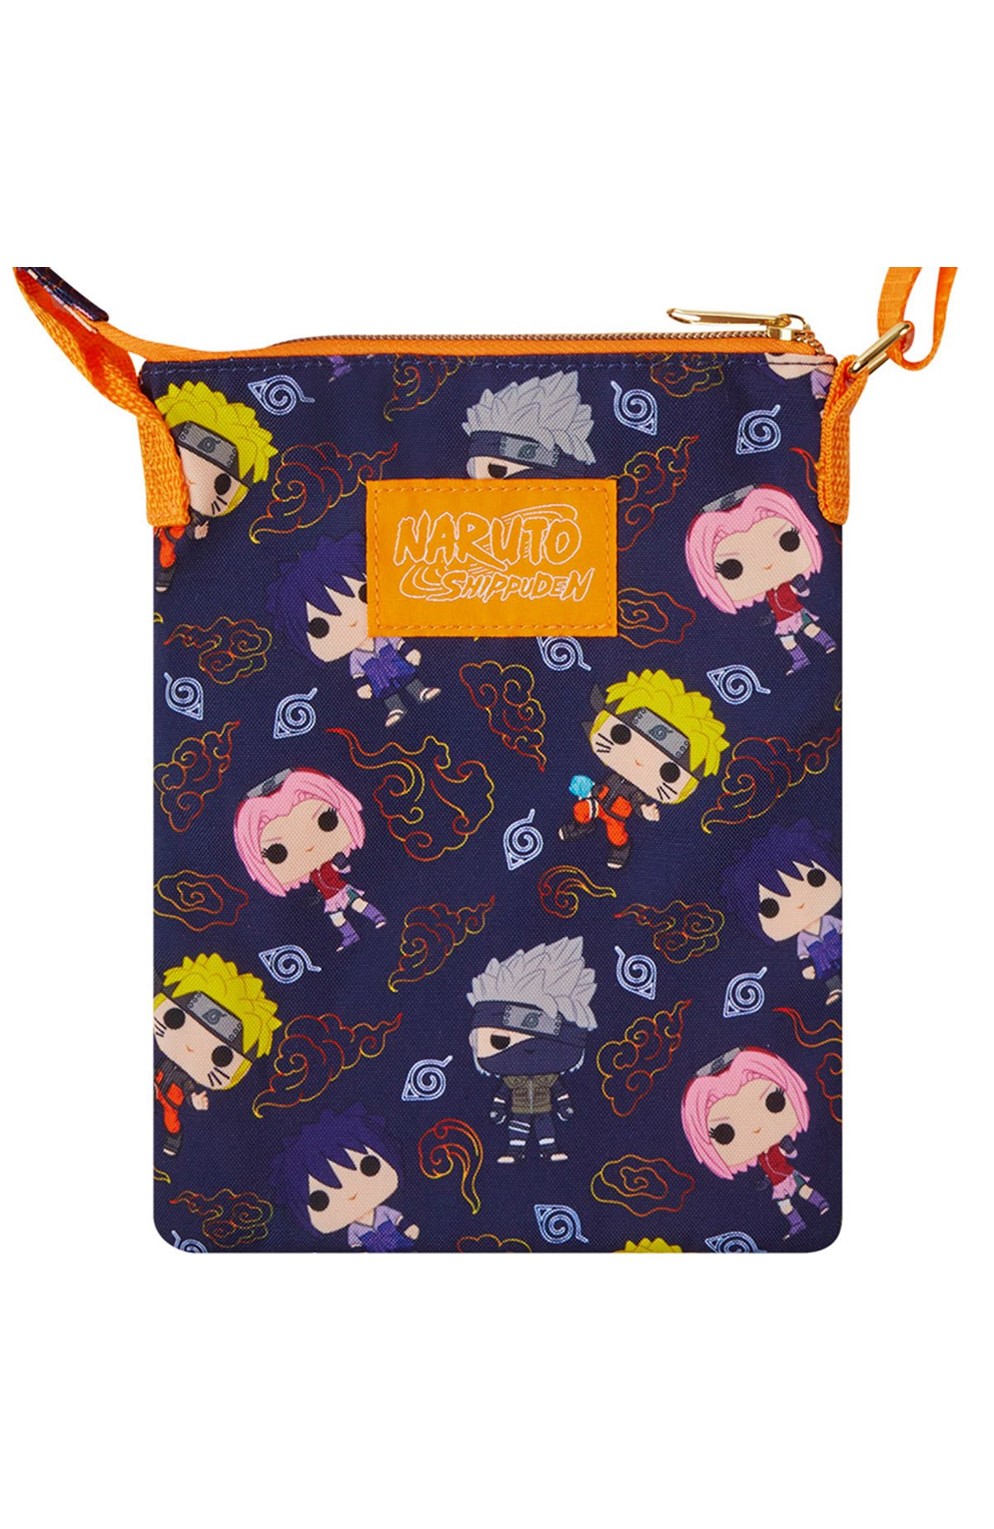 Naruto Pop! Group Print Crossbody Passport Bag